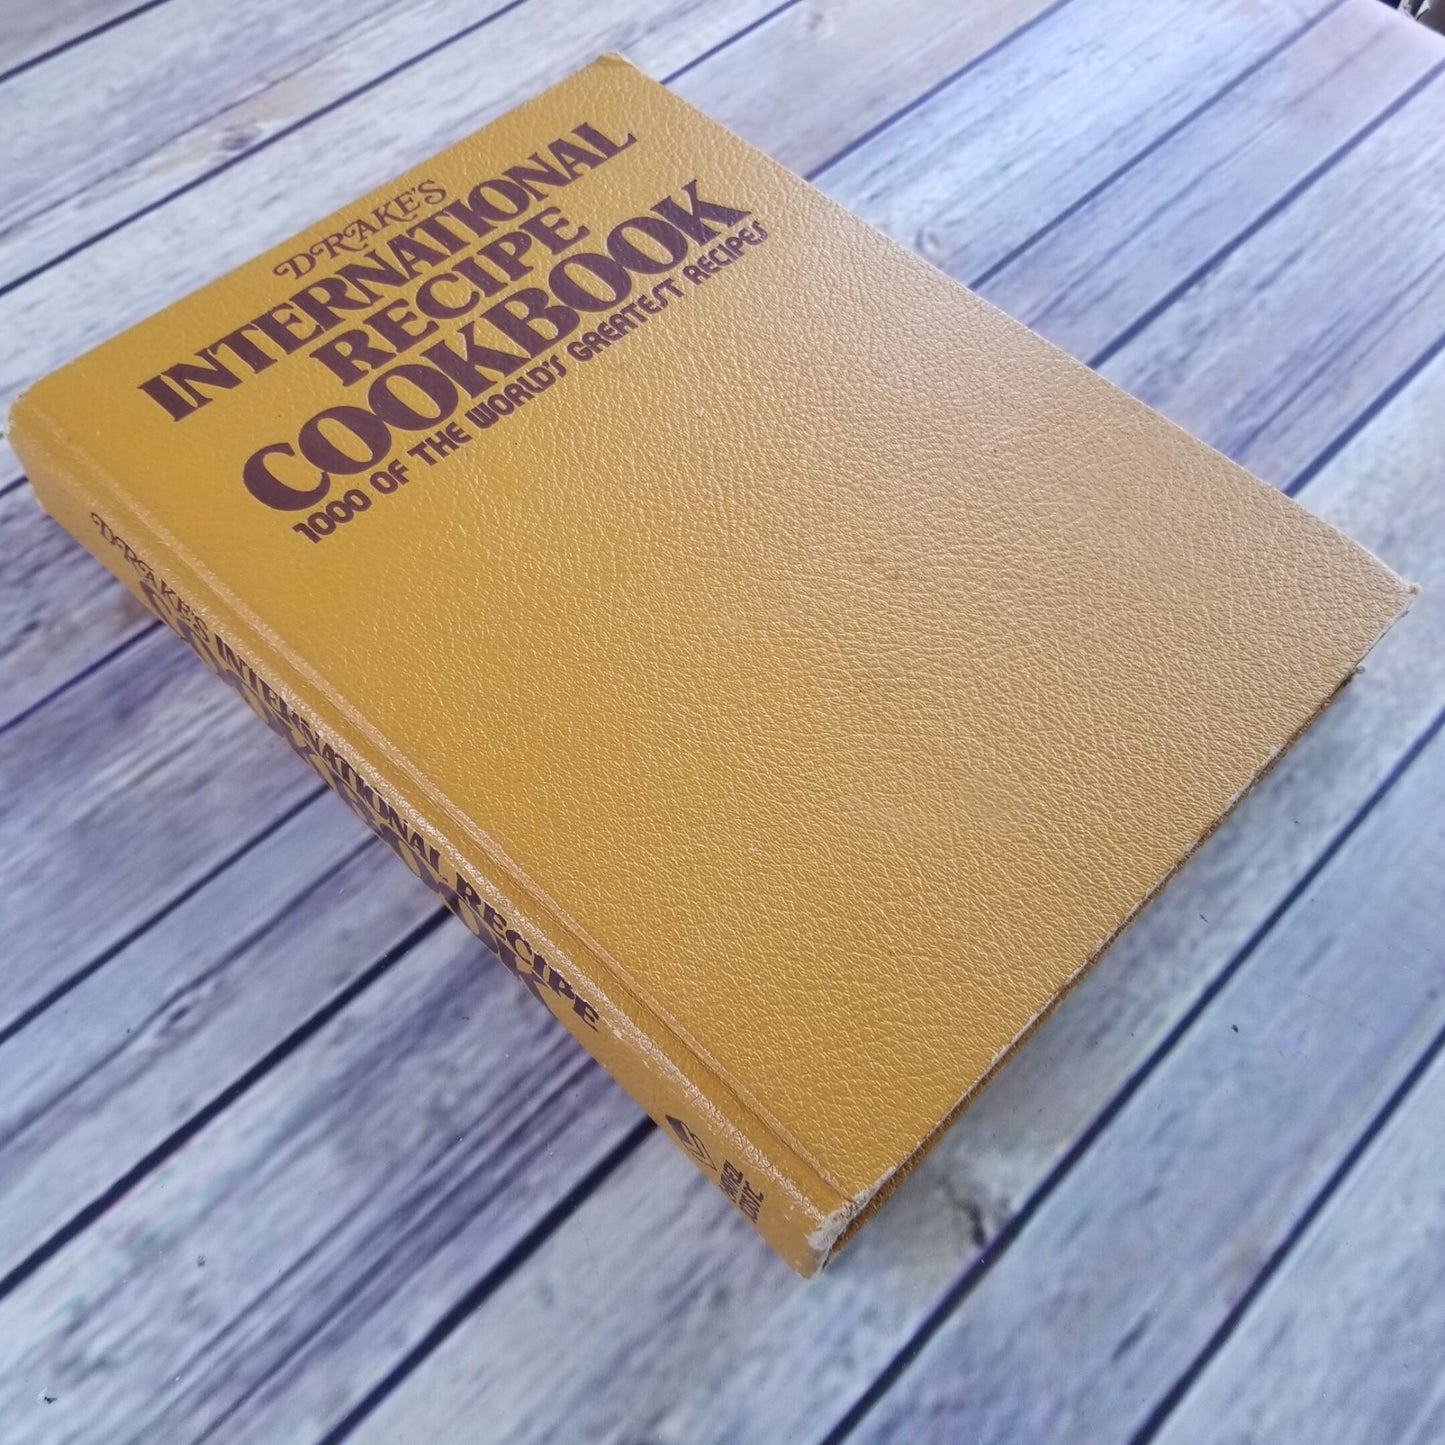 Vintage Cookbook Drakes International Recipes 1974 Hardcover 1000 International Recipes NO Dust Jacket